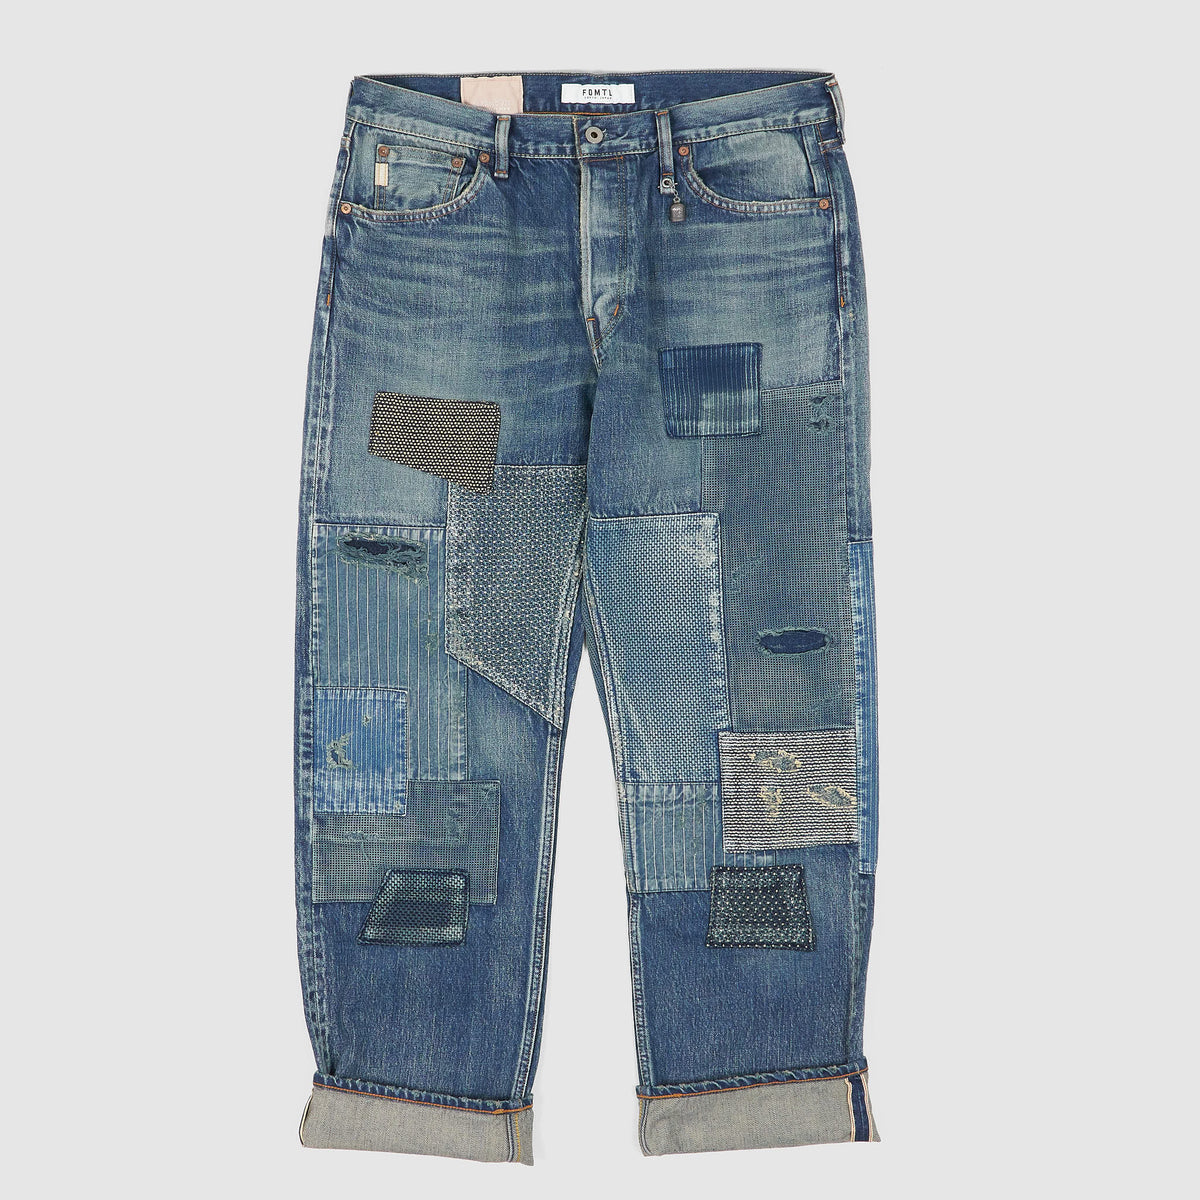 FDMTL Classic Straight Cut Patchwork Denim Jeans